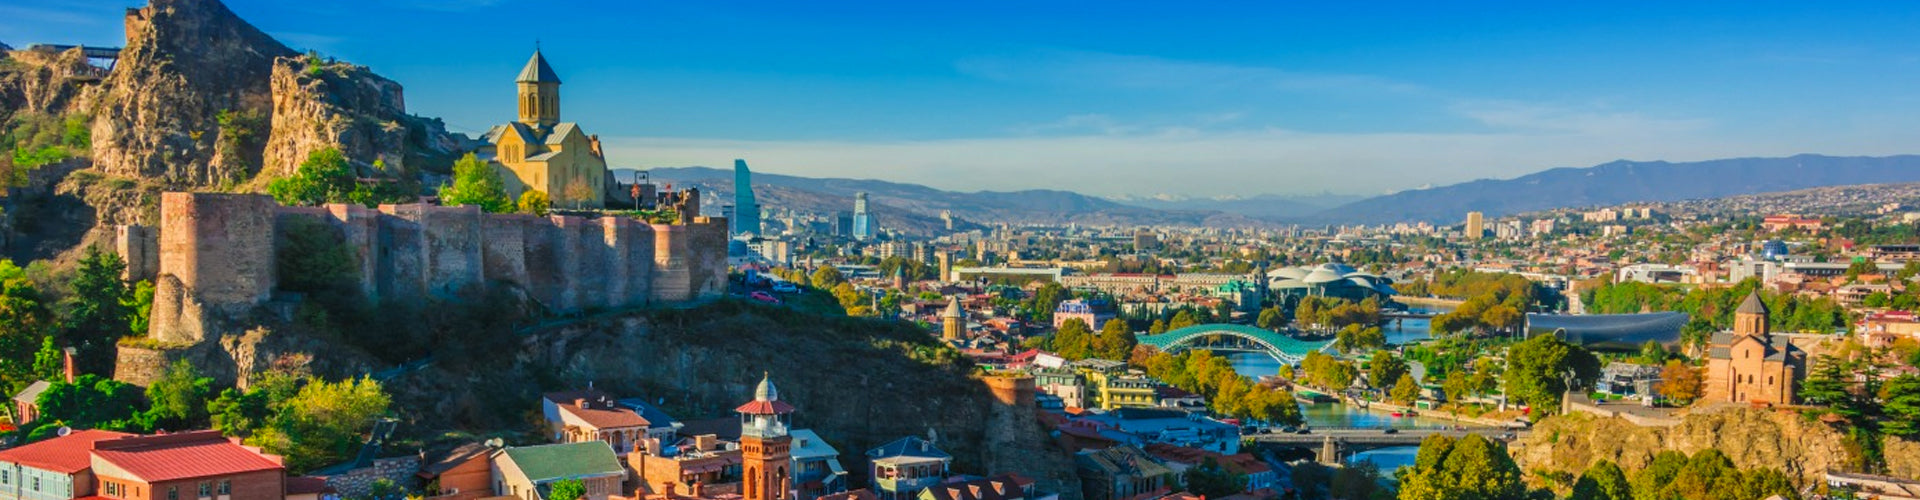 The Georgian capital city of Tbilisi